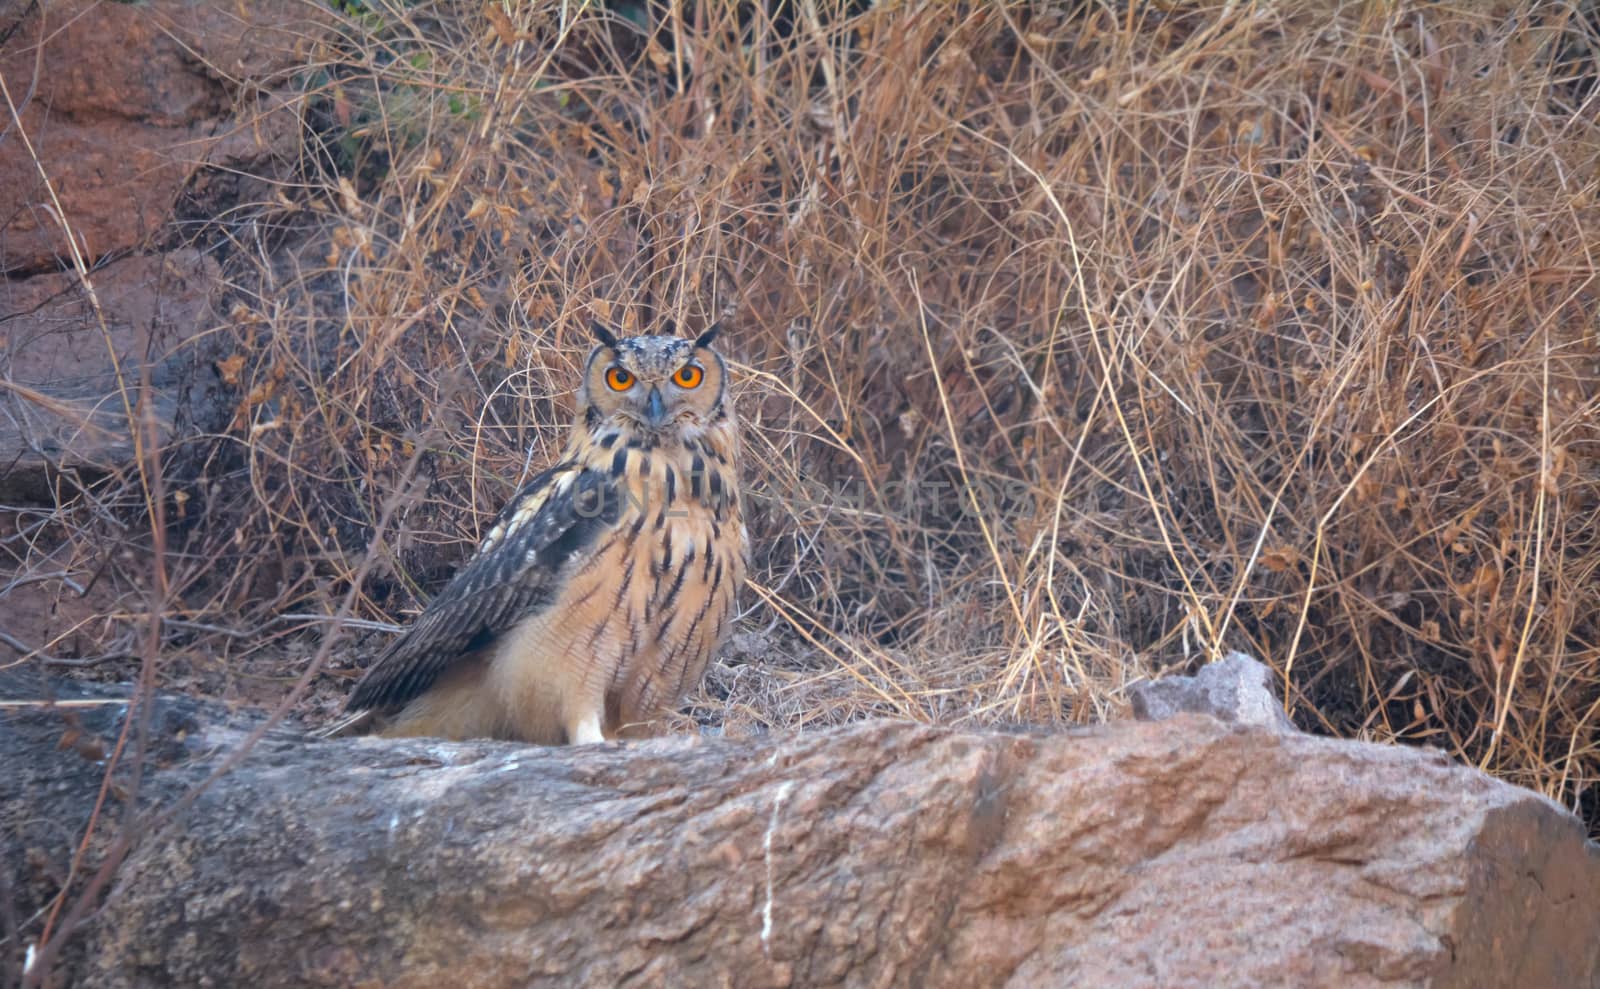 Indian eagle owl by rkbalaji